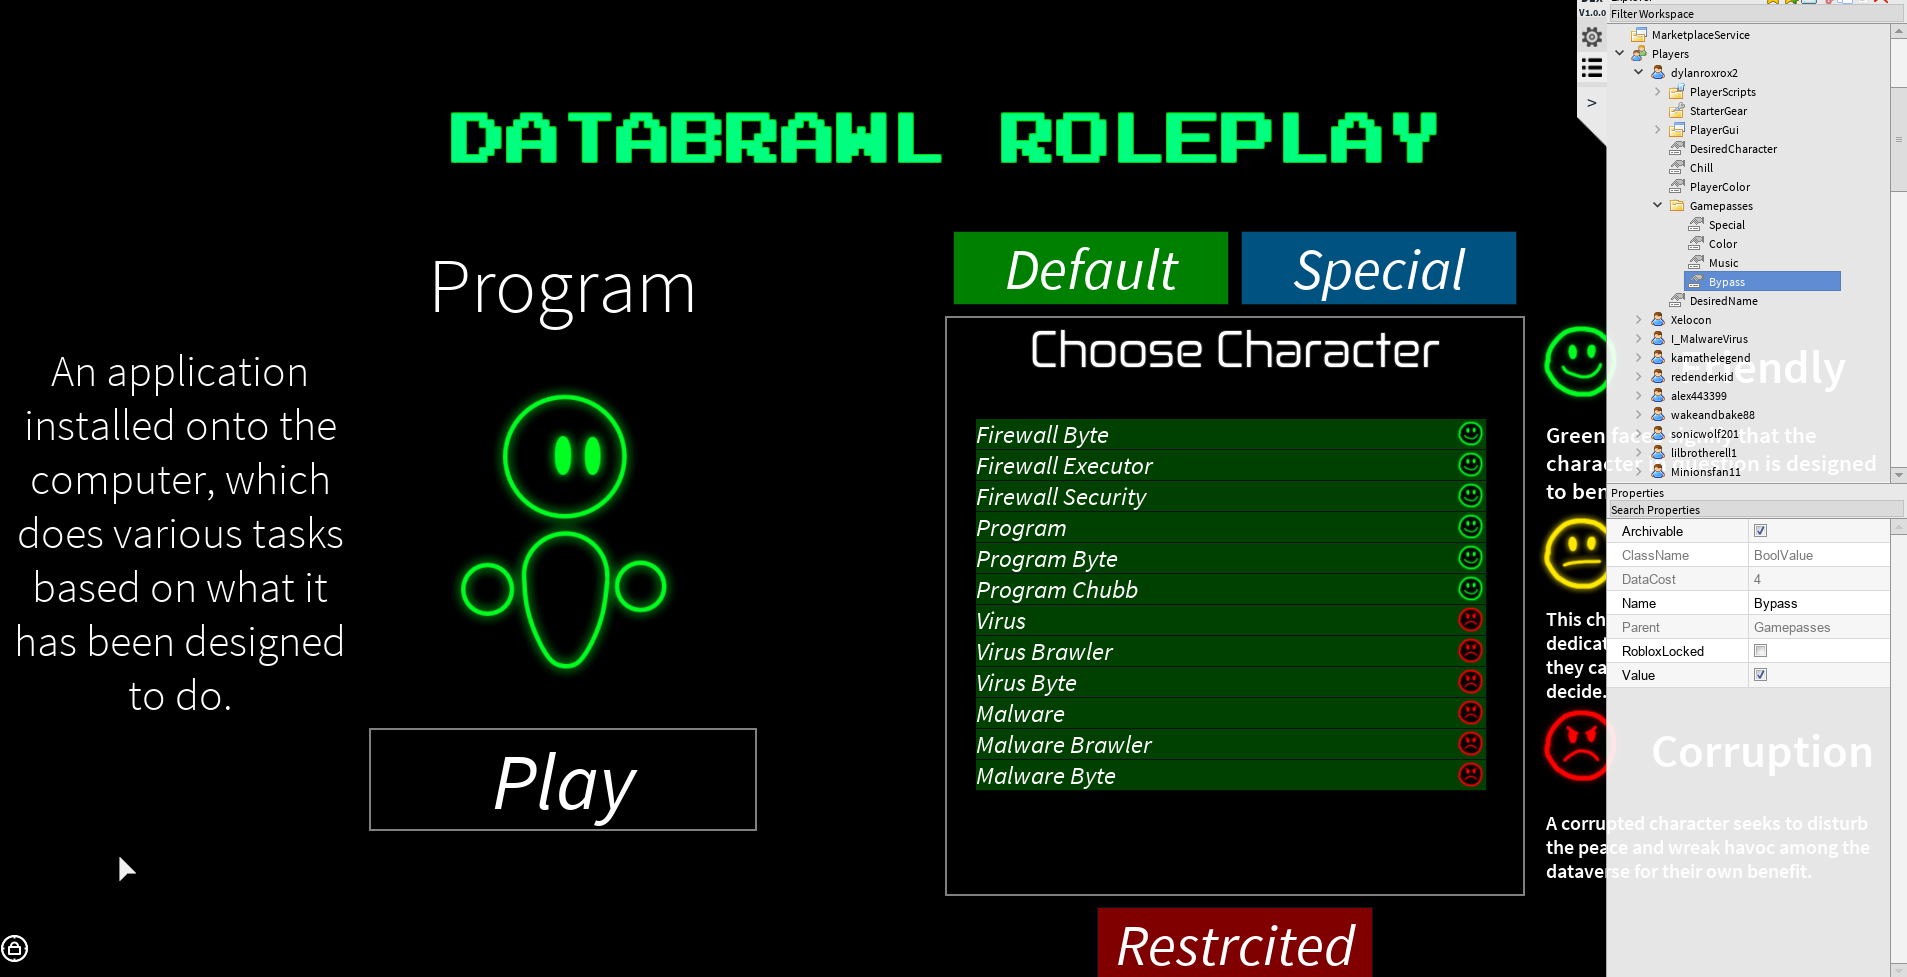 Databrawl Characters Roblox Virus Malware Programs Firewall.